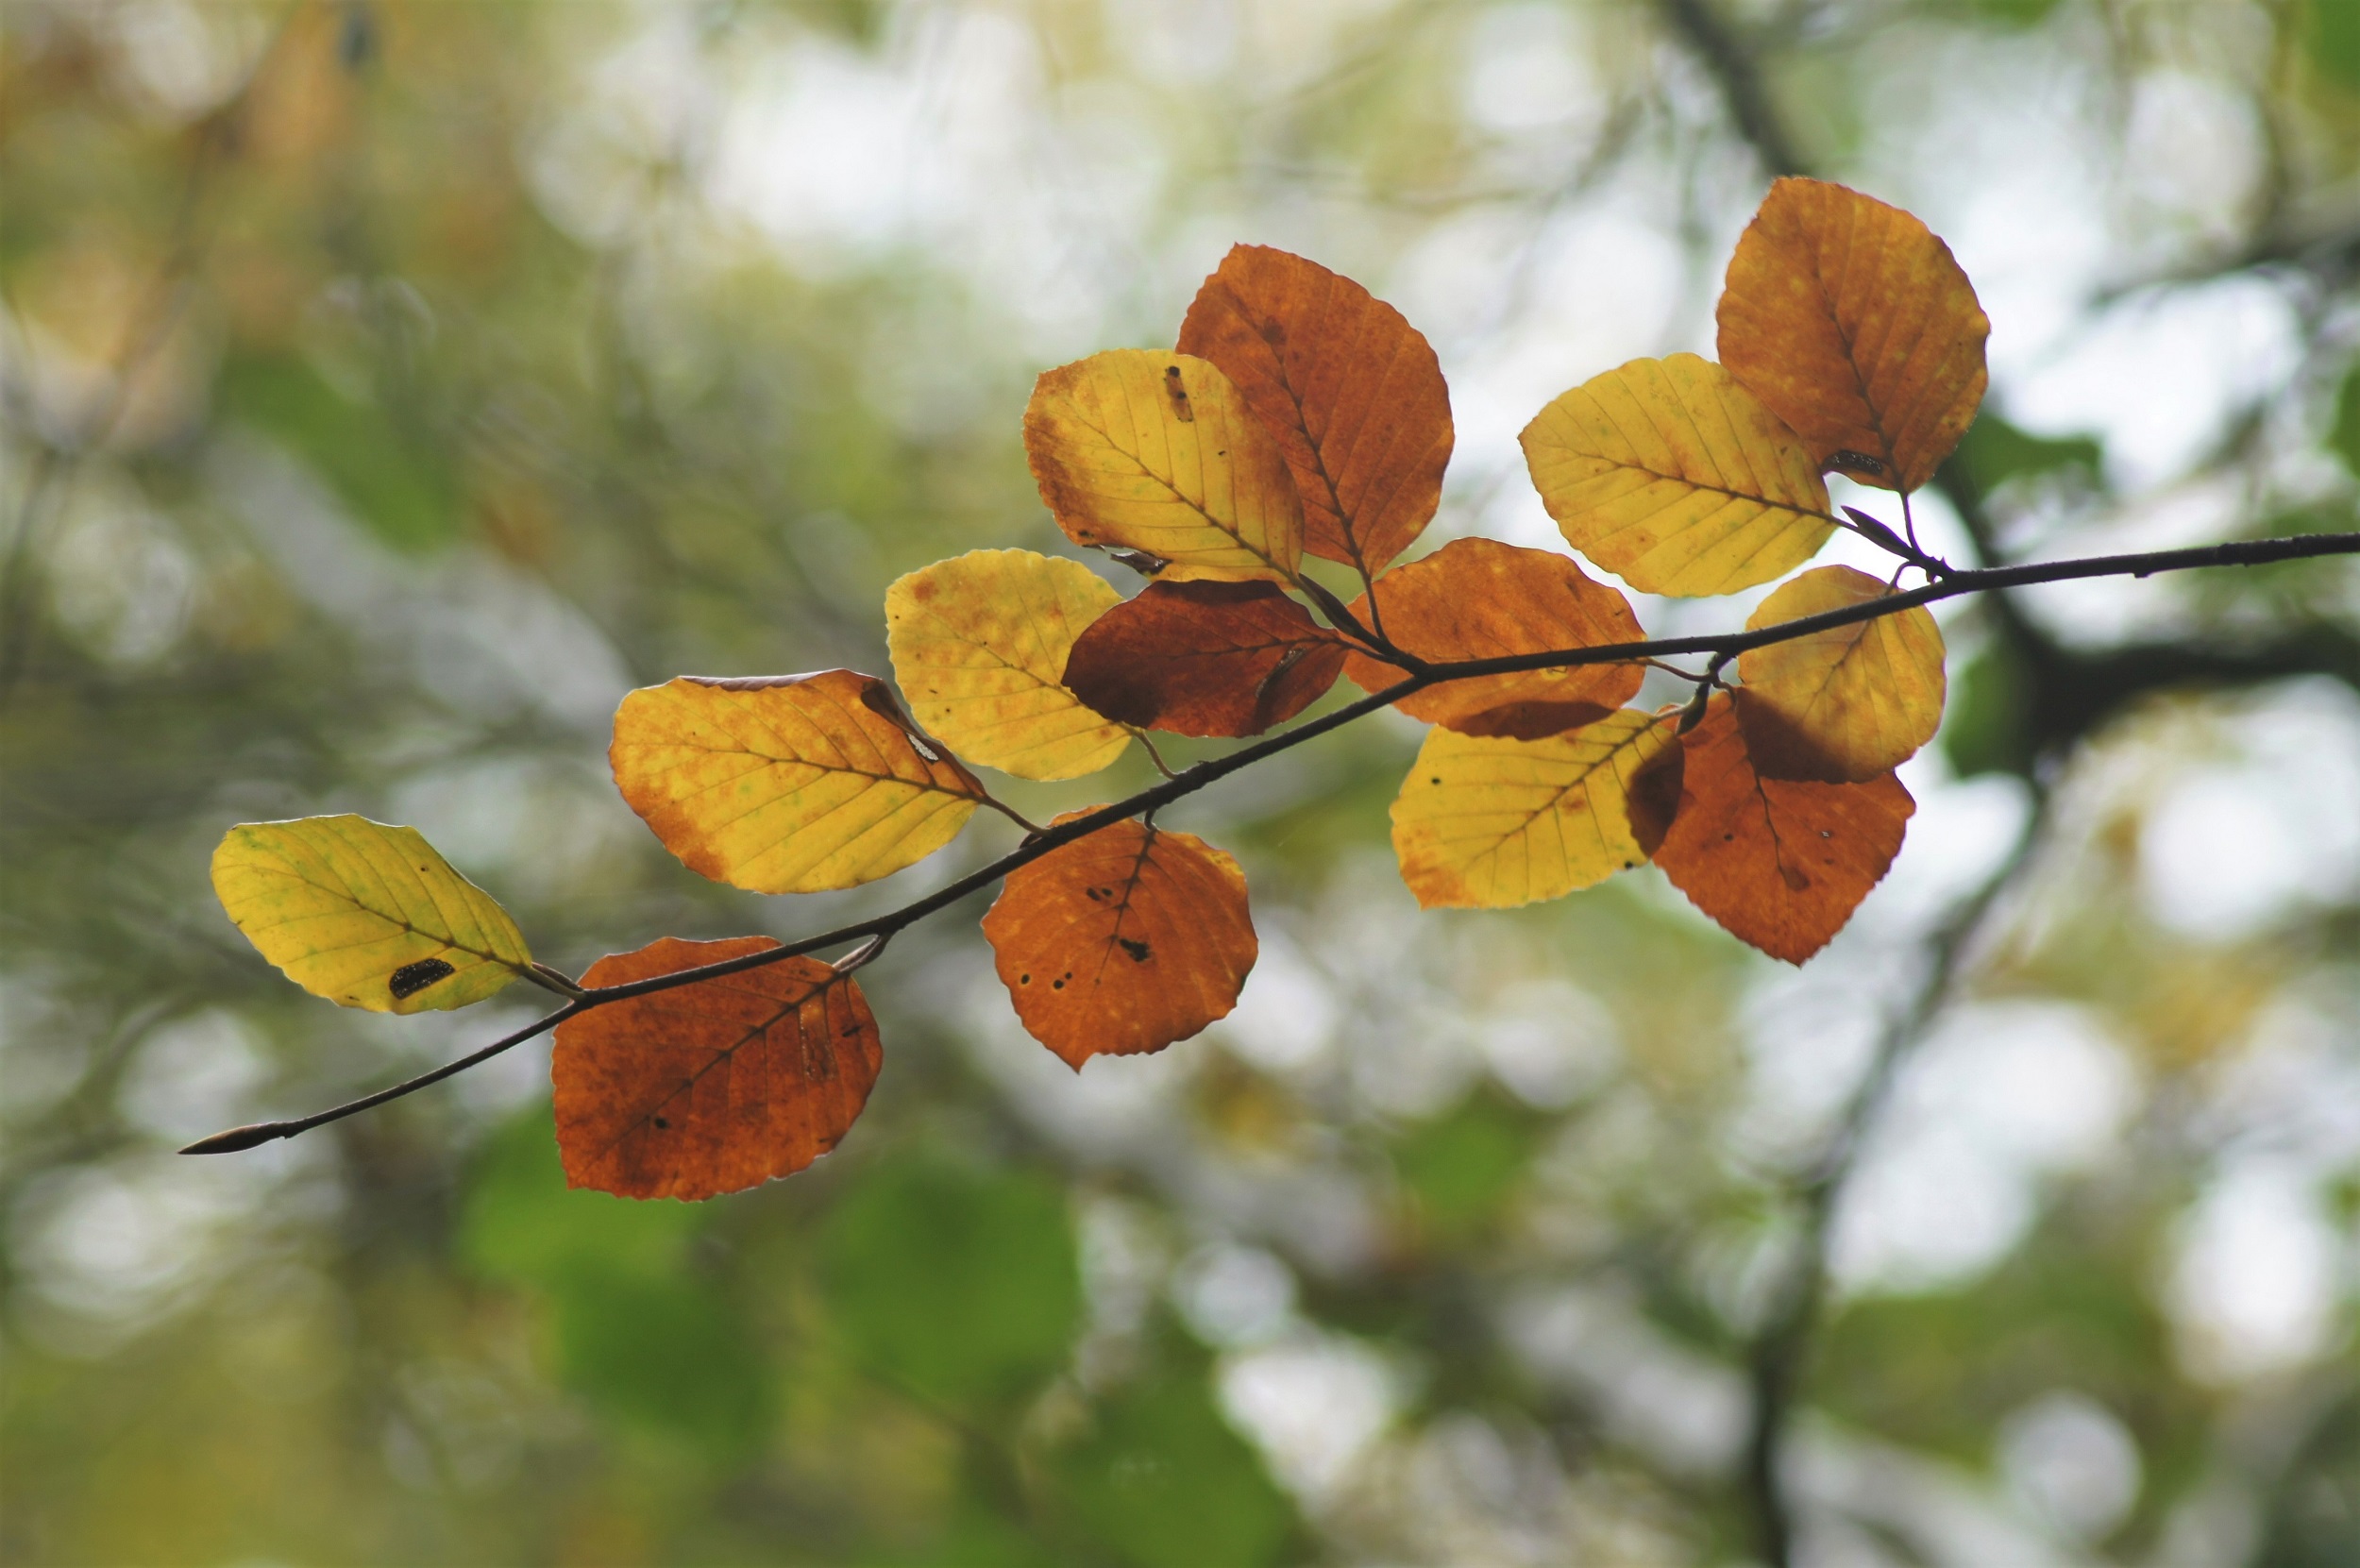 "Golden Leaves" by Barbara Potts